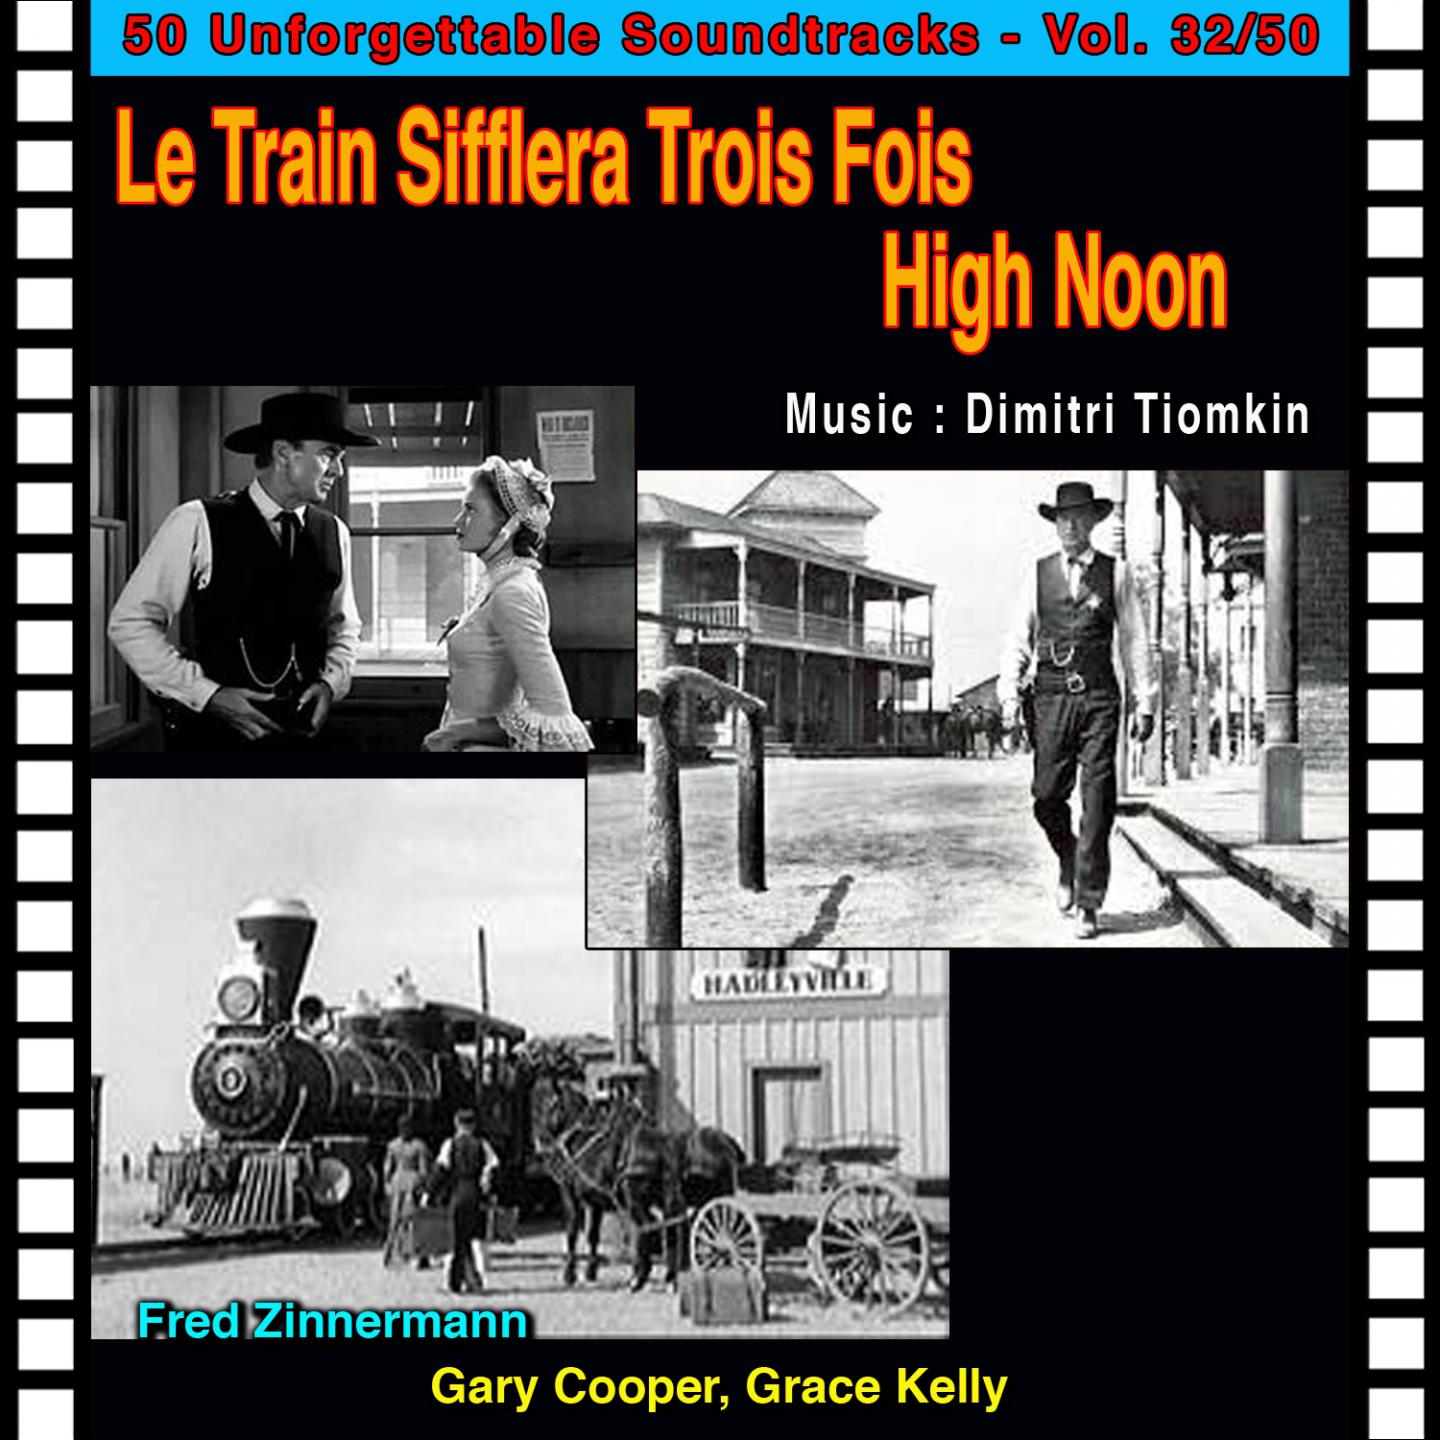 Nearly Train Time (Le Train Sifflera Trois Fois - High Noon)